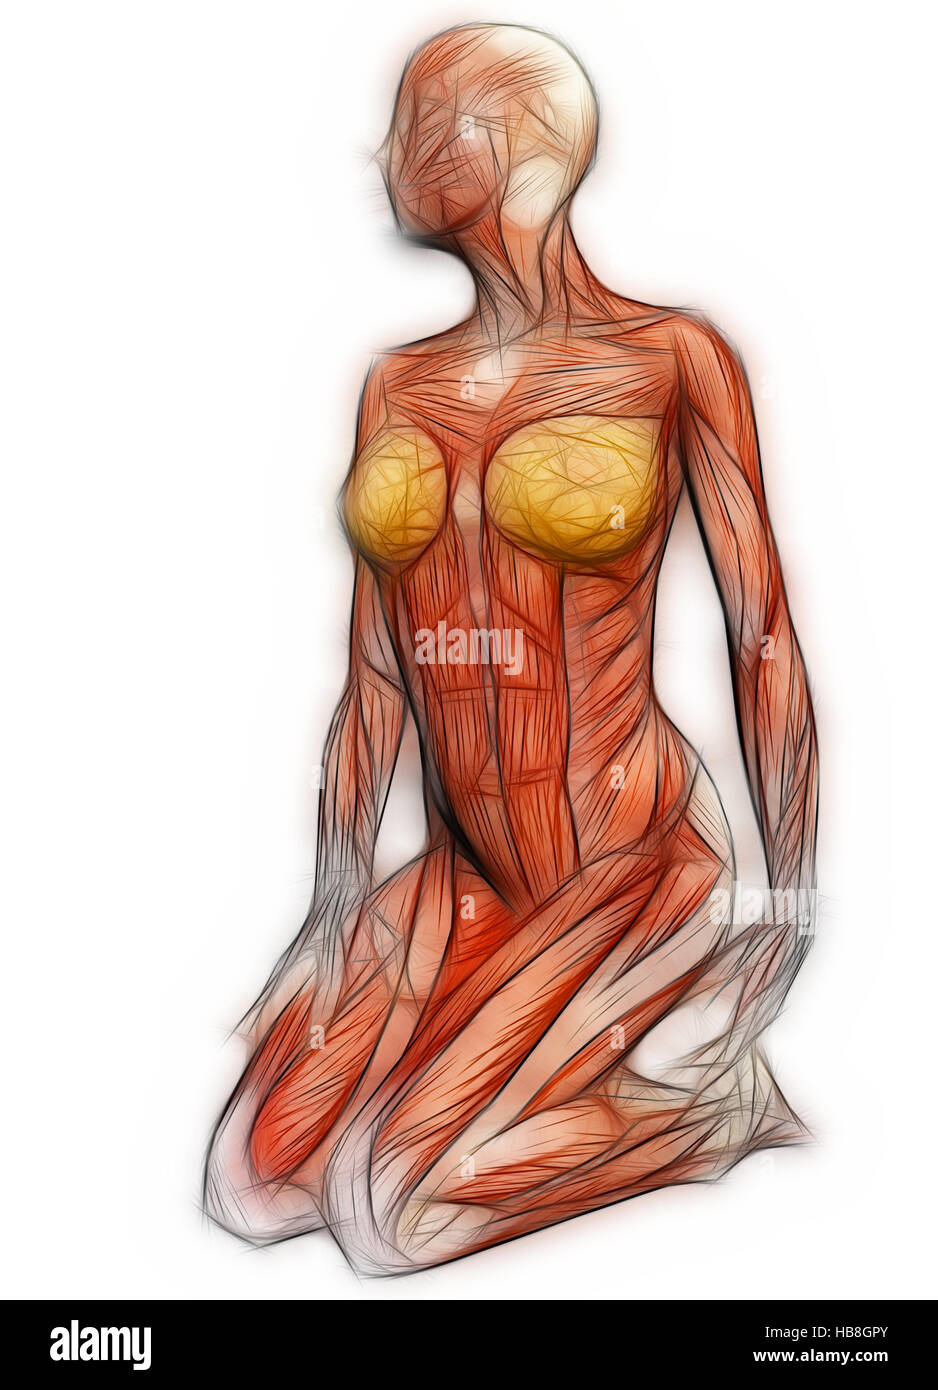 Human Anatomy - Female Muscles Stock Photo - Alamy